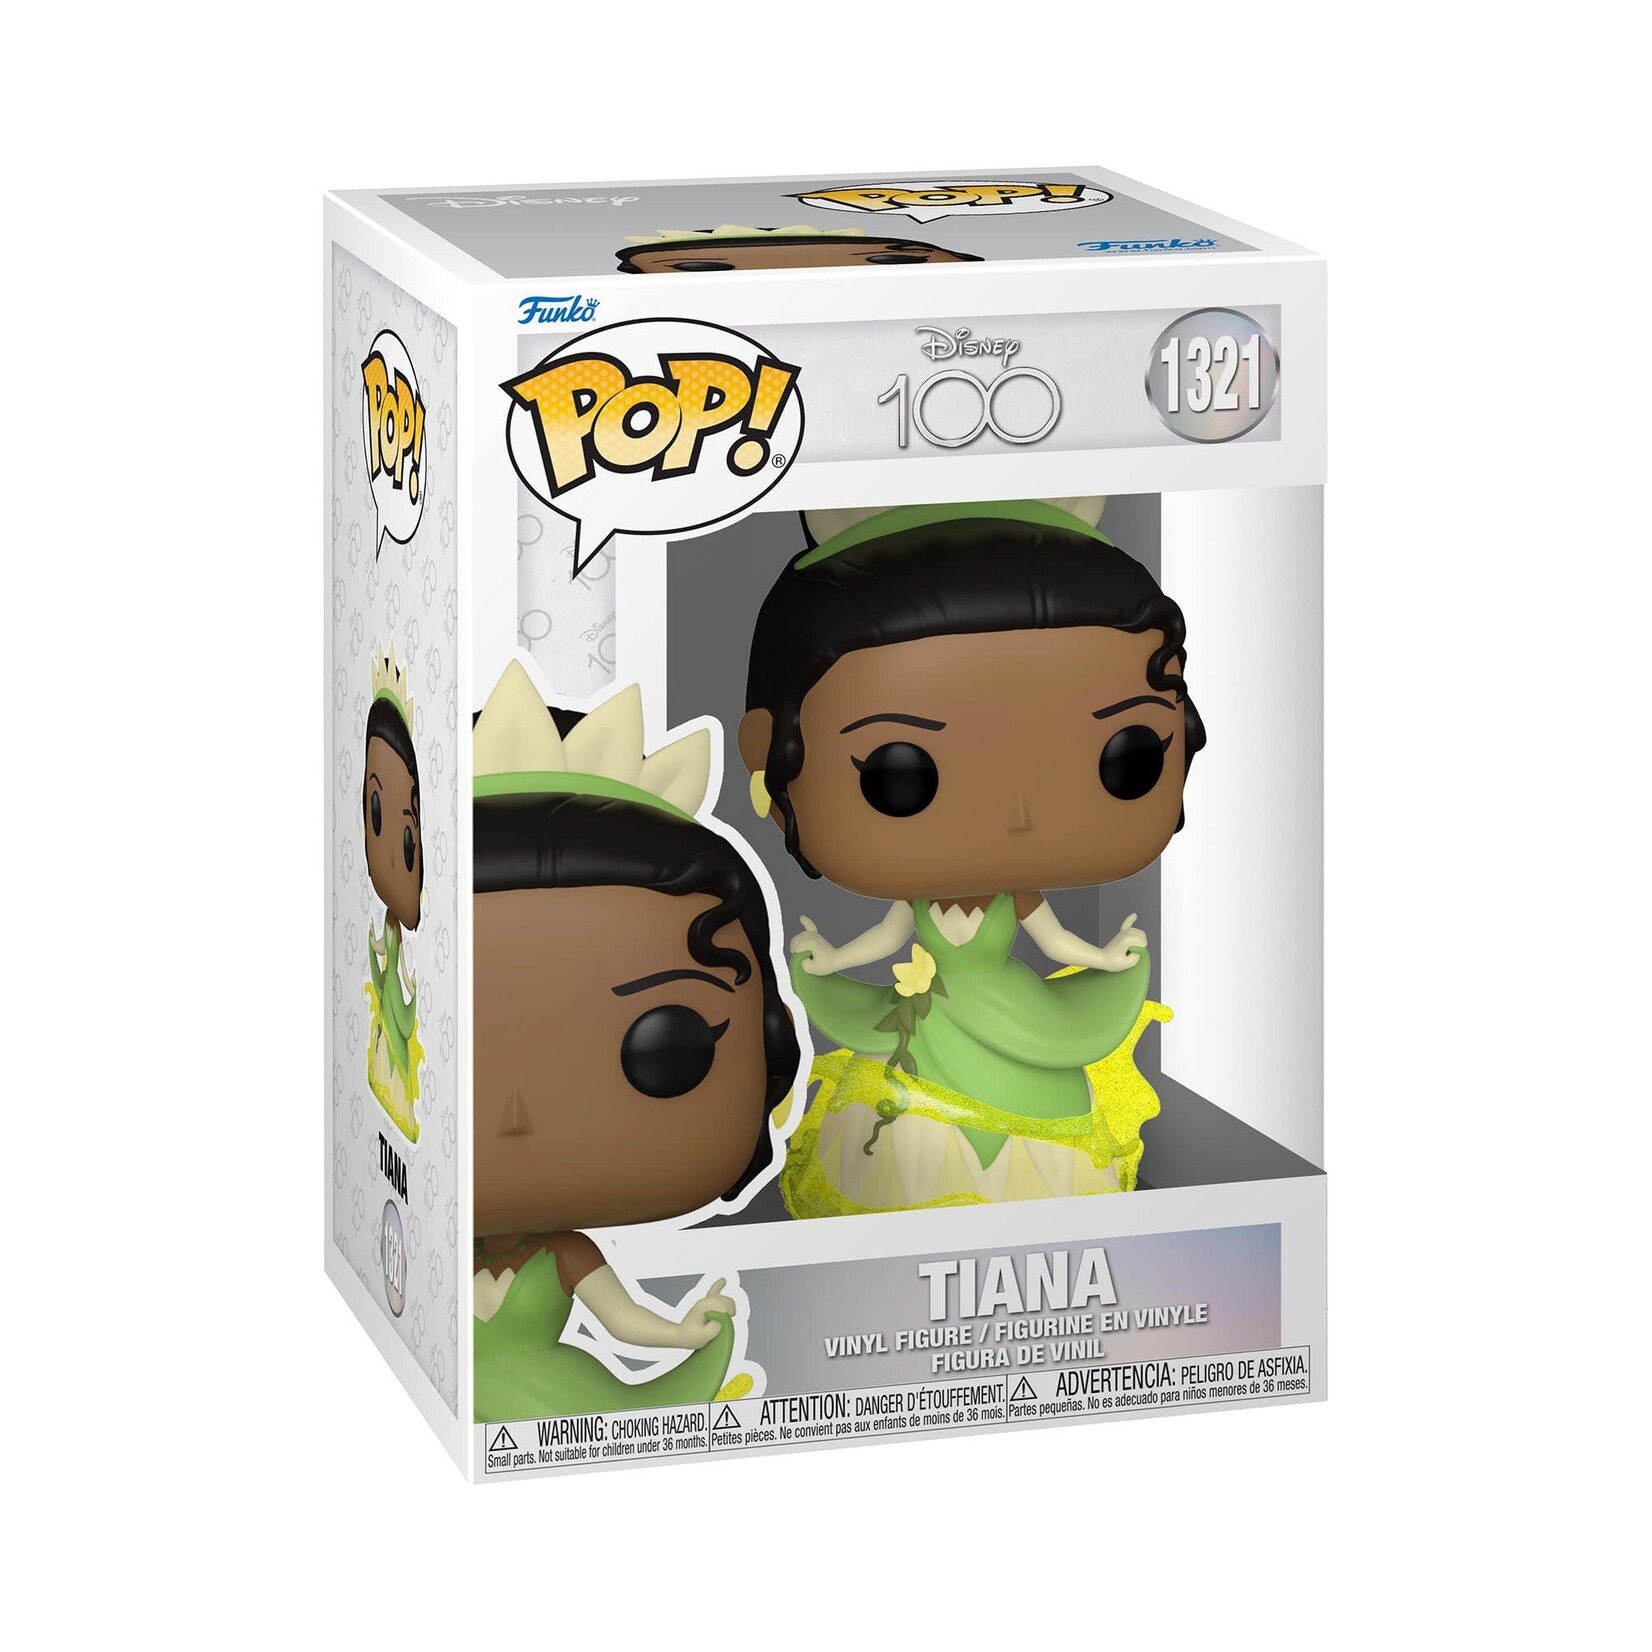 Funko Pop! Disney 100e 1321 - Tiana